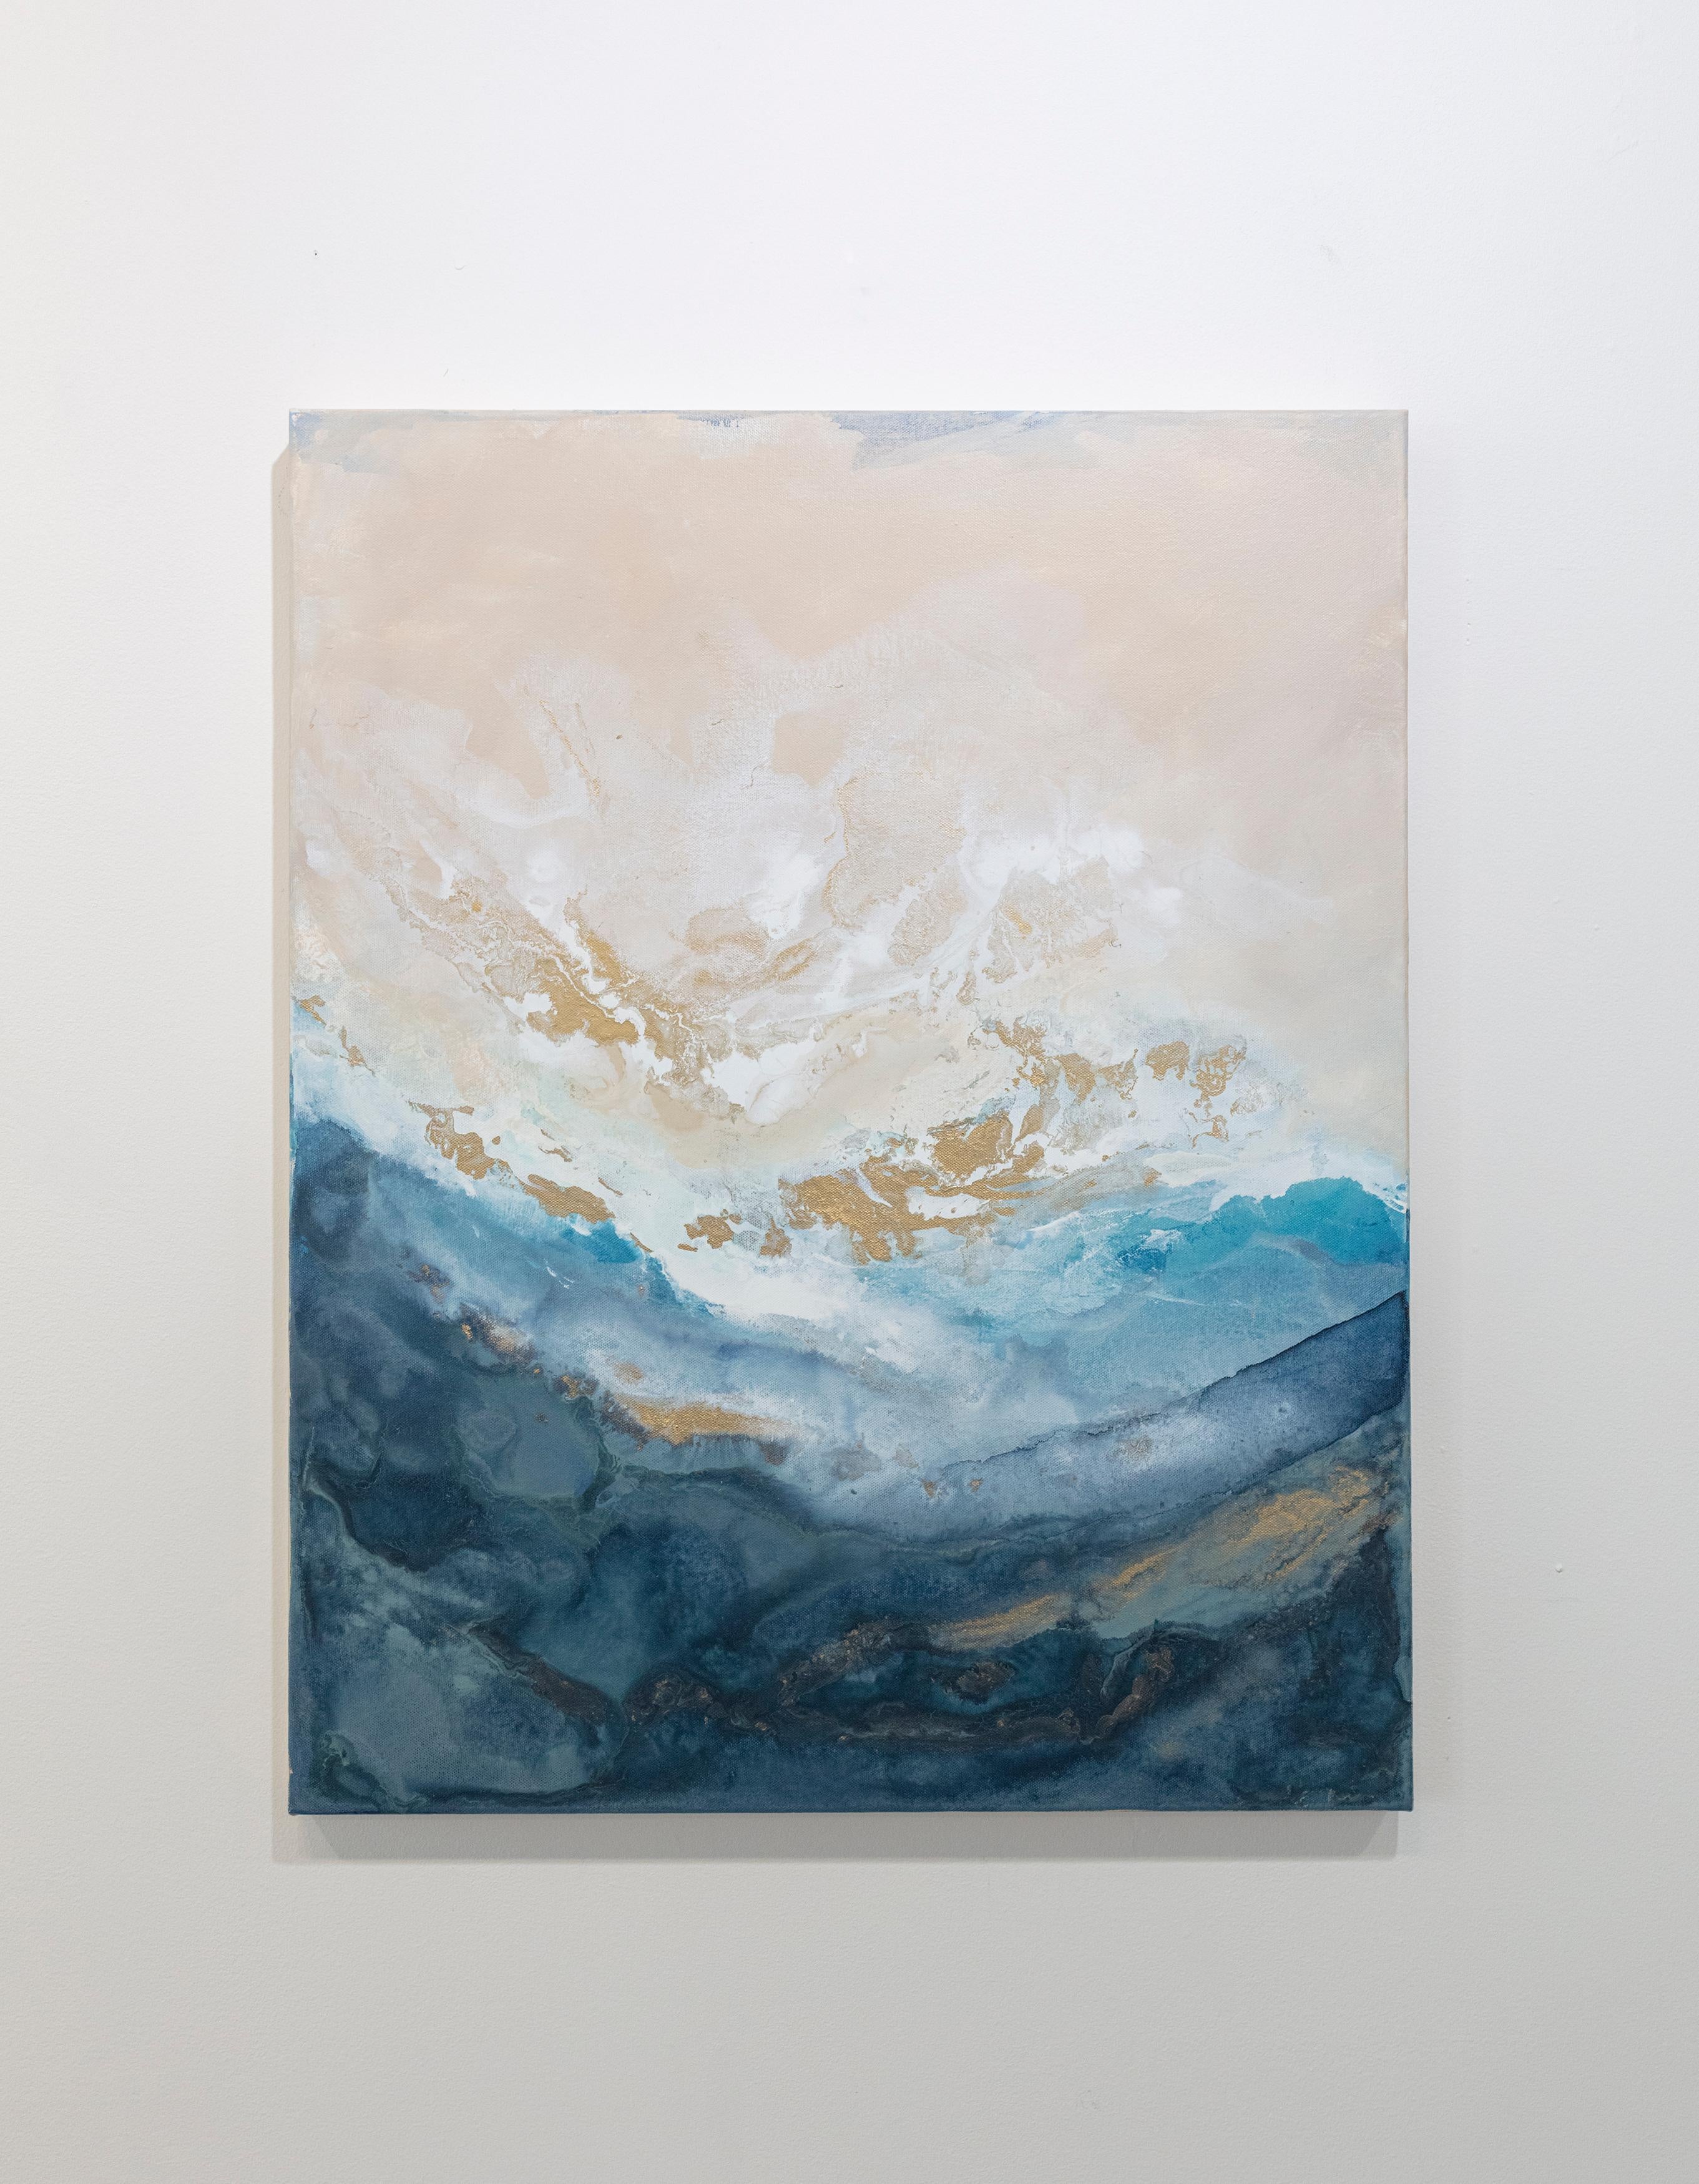 Abstract Painting Julia Contacessi - Peinture abstraite "Delight in the Dawn" (Le plaisir de l'aube)